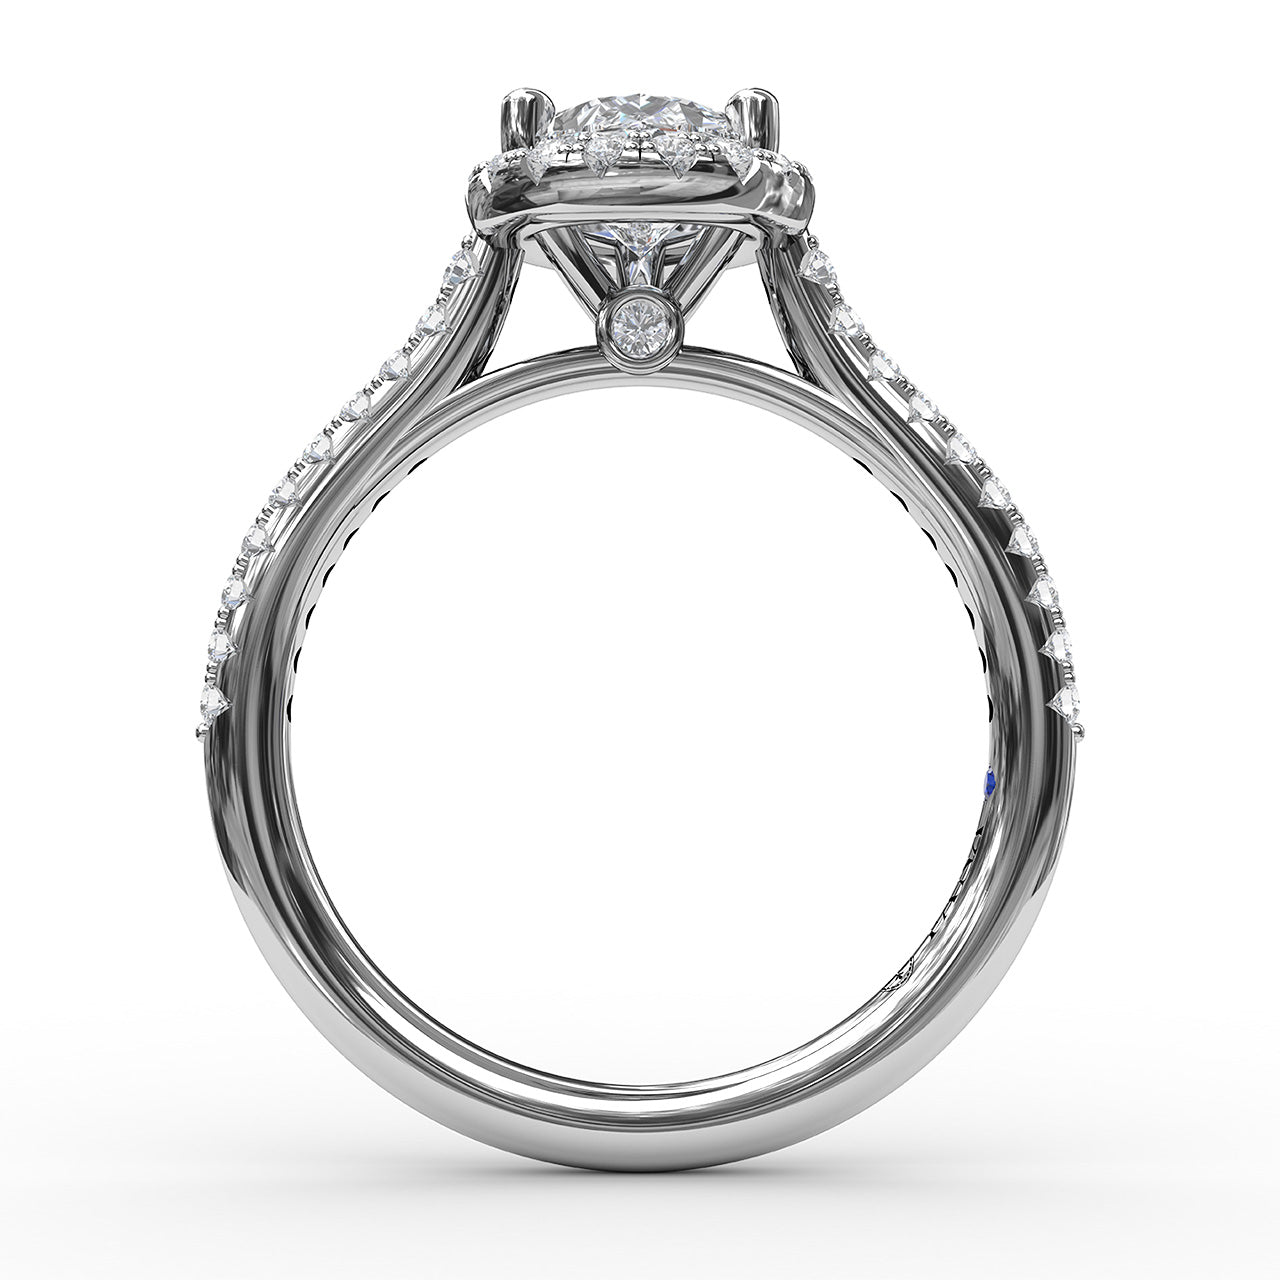 FANA 14 Karat White Gold Pear Shaped Engagement Ring S3791/WG